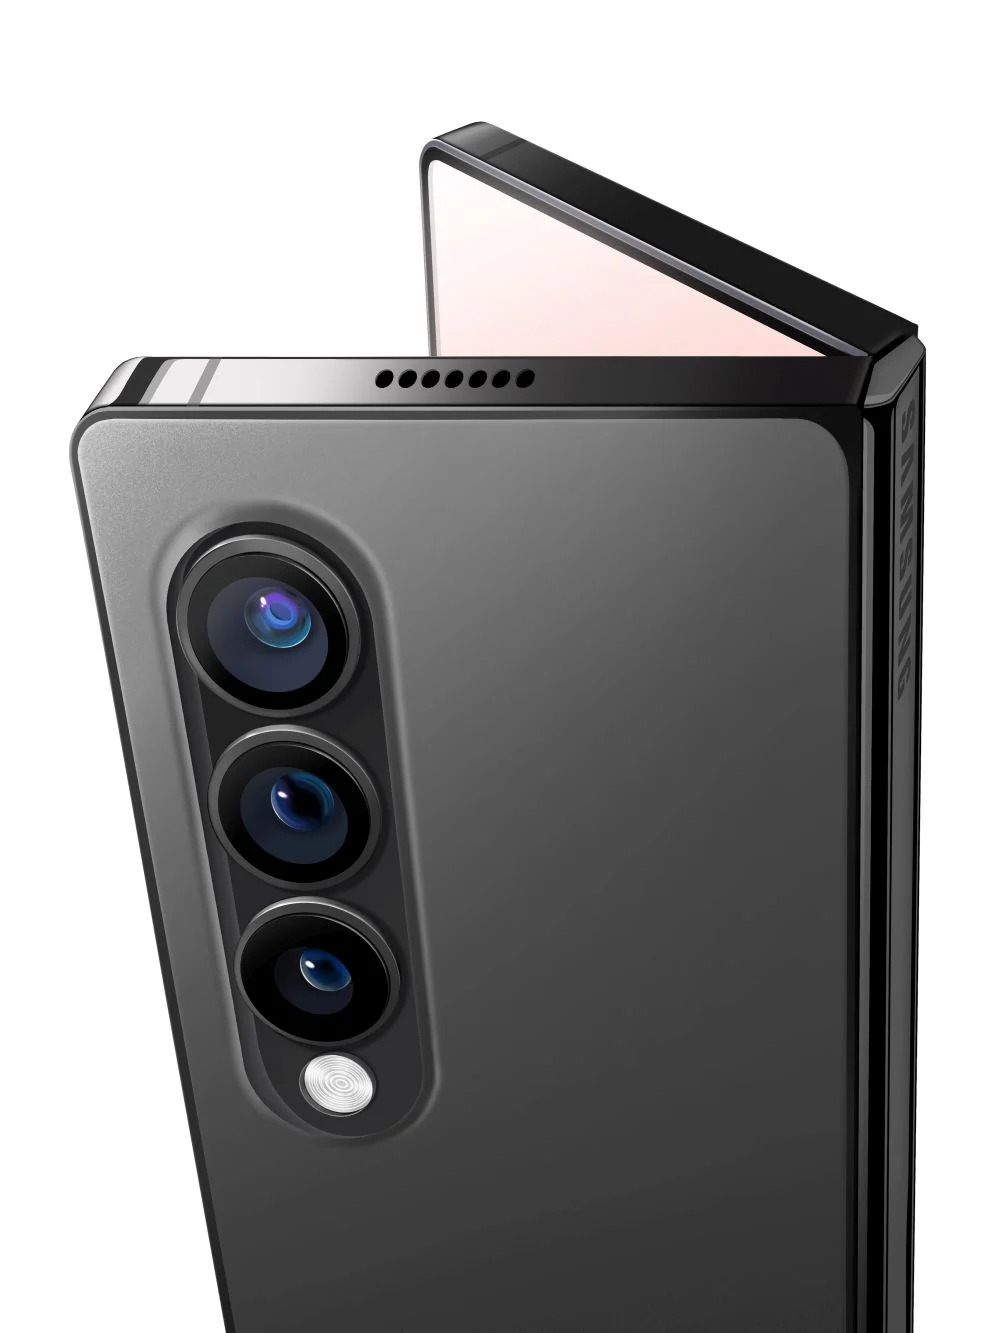 Samsung Galaxy Z Fold 3 Concept Renders Show Flat Edge Design Of The Smartphone Gizmochina